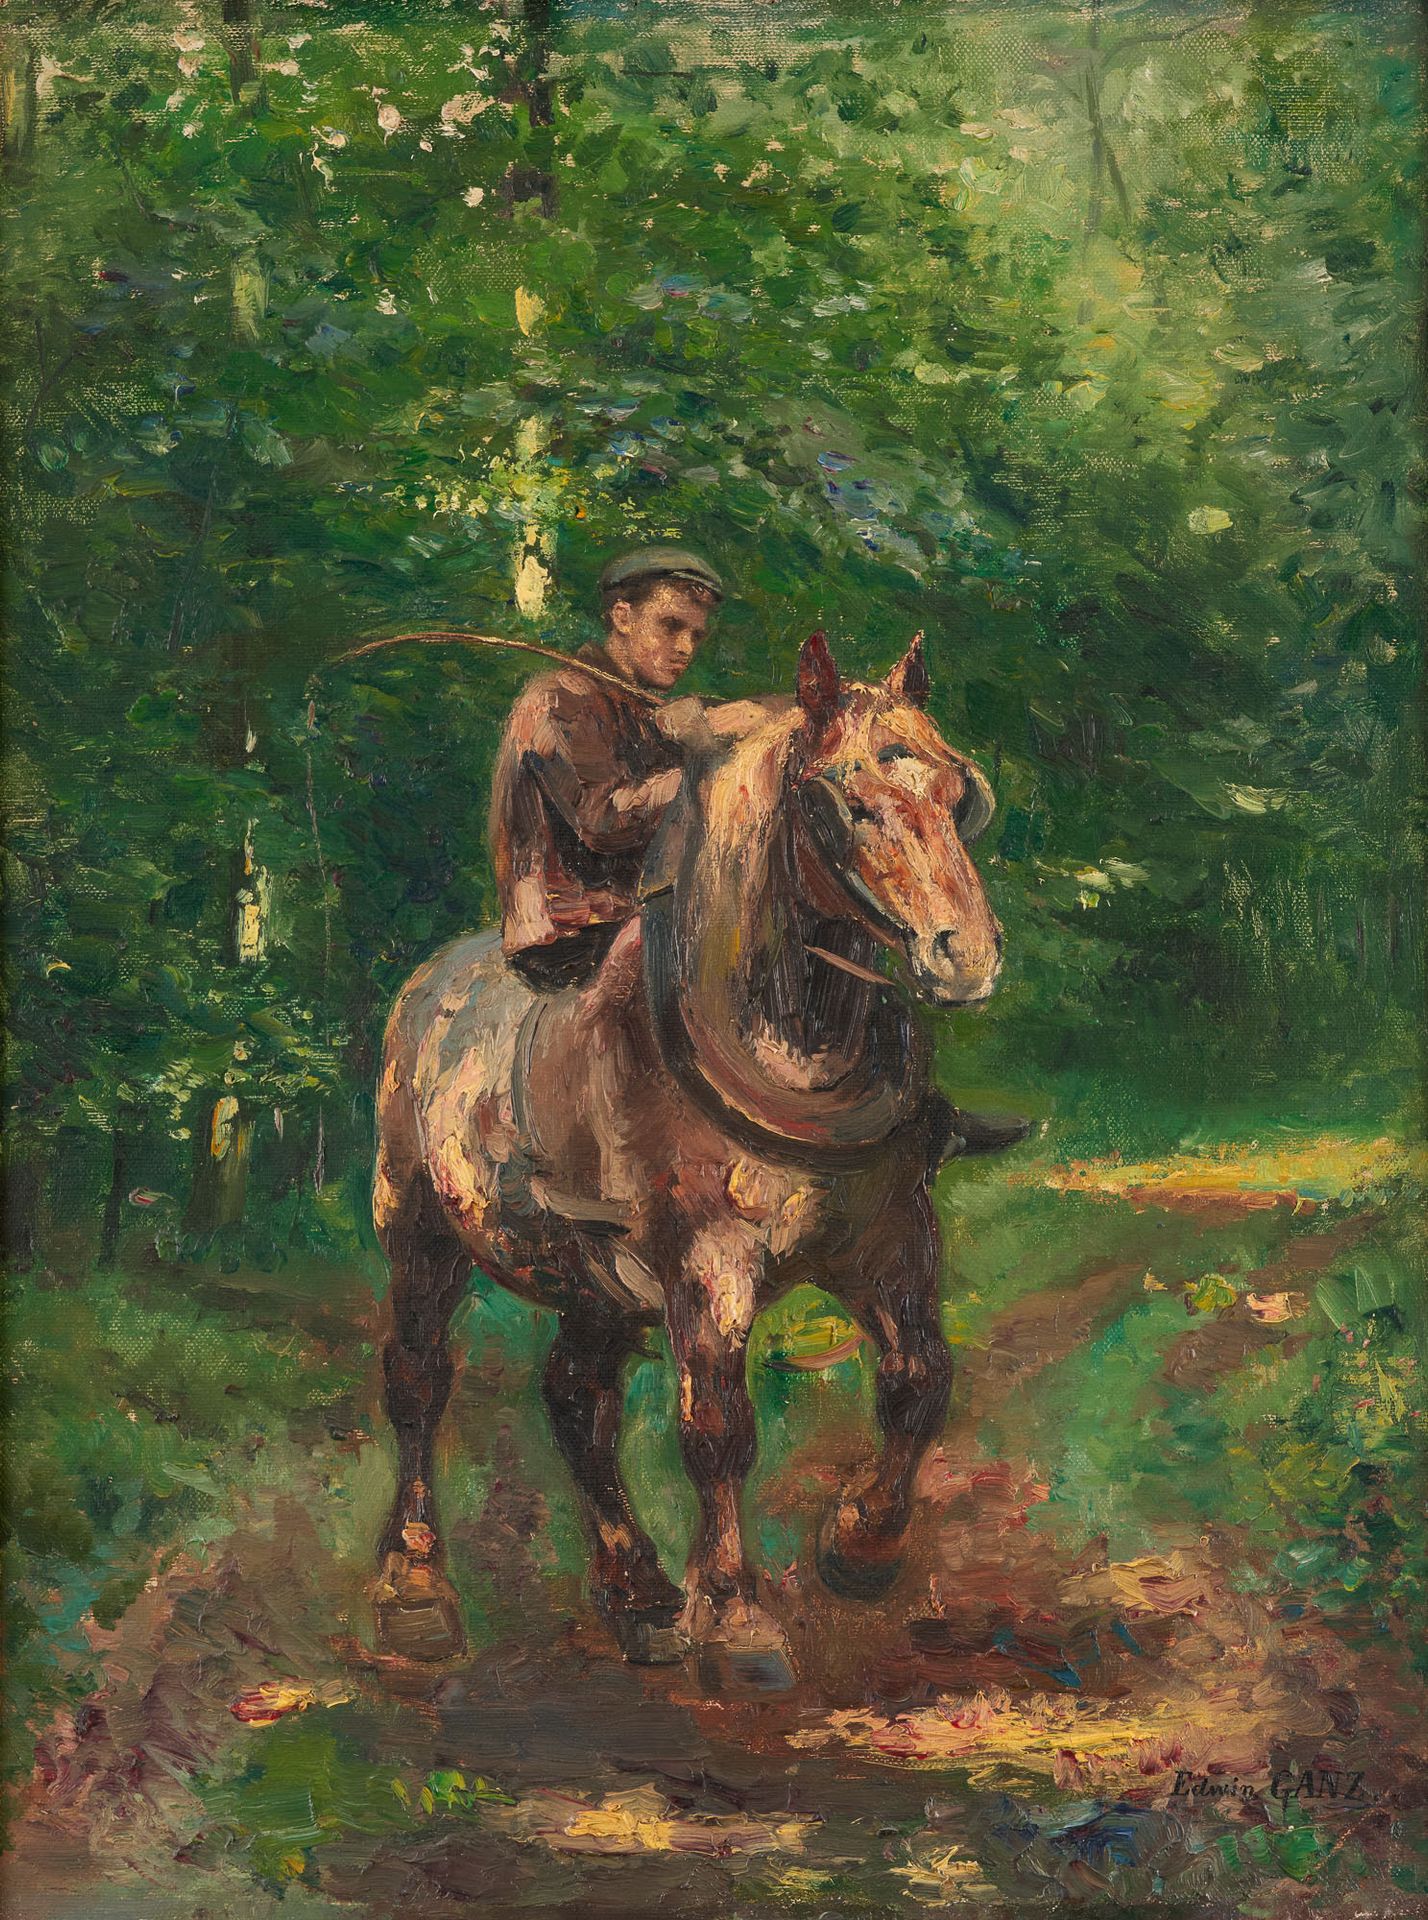 Edwin GANZ École belge (1871-1957) 布面油画：骑士从森林中走出来。

签名：埃德温-甘孜。

尺寸：73 x 56厘米。